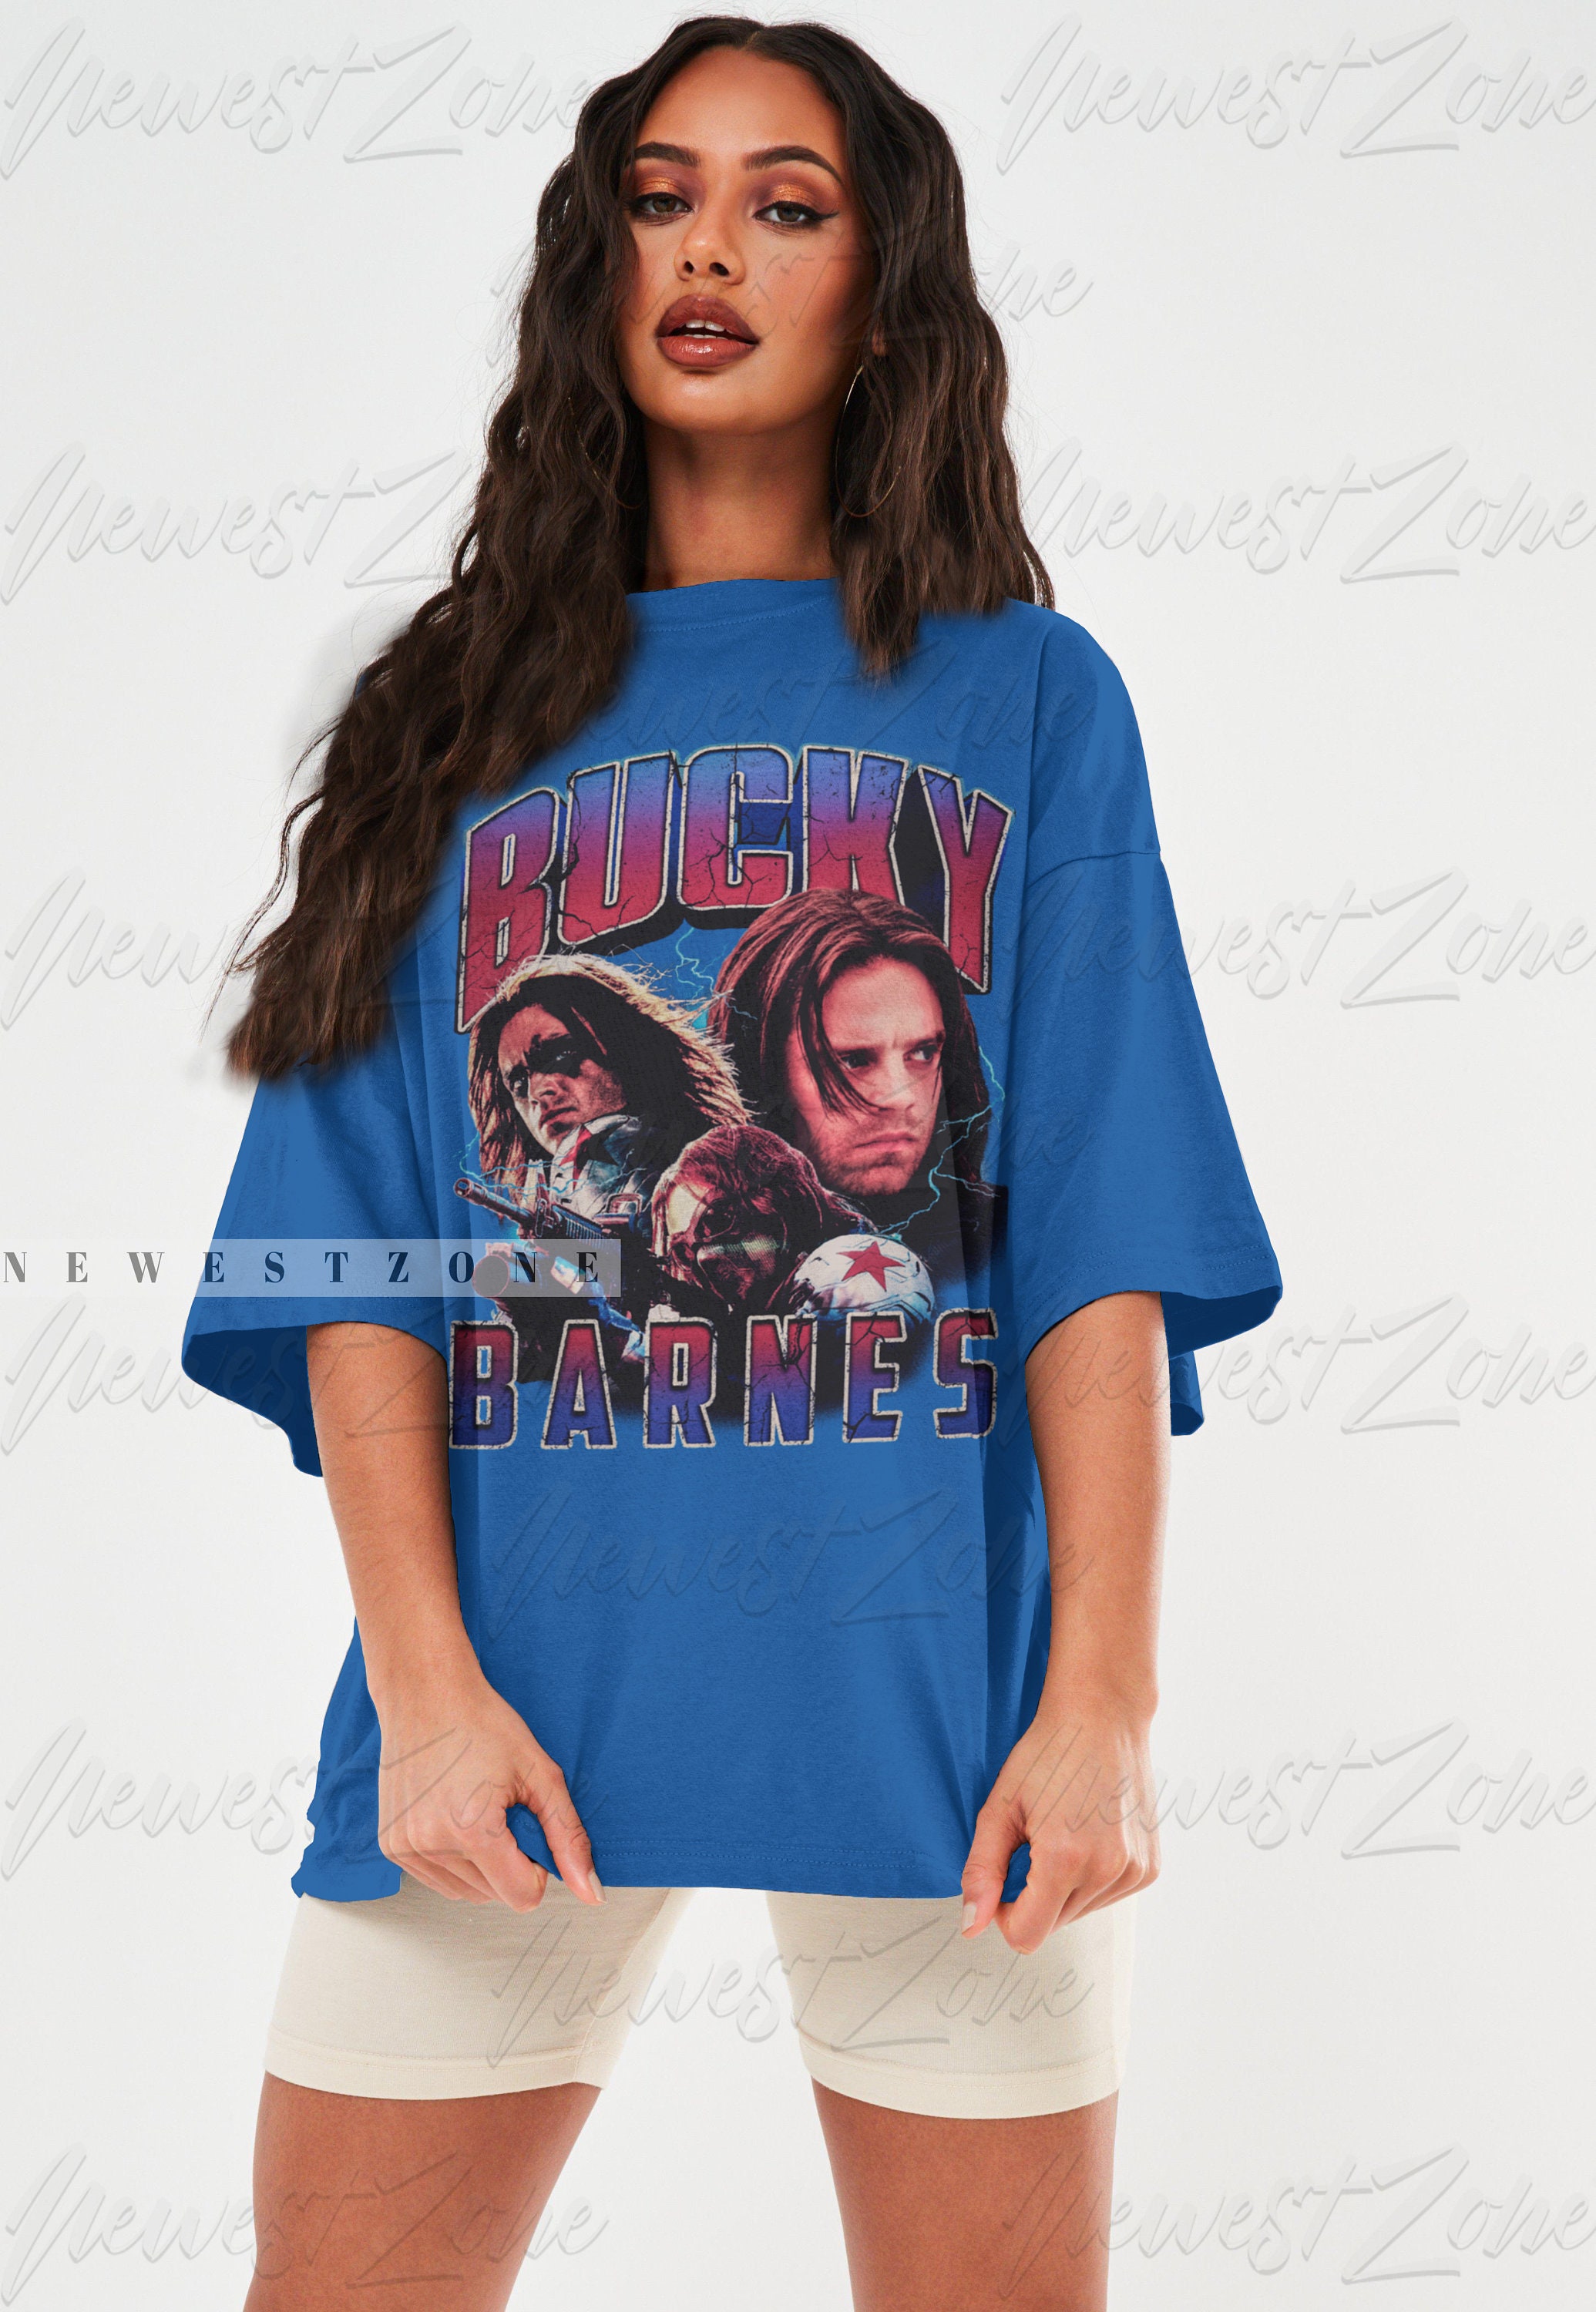 Discover Bucky Barnes Shirt Actor Movie Drama Television Series United States Retro Vintage T-Shirt